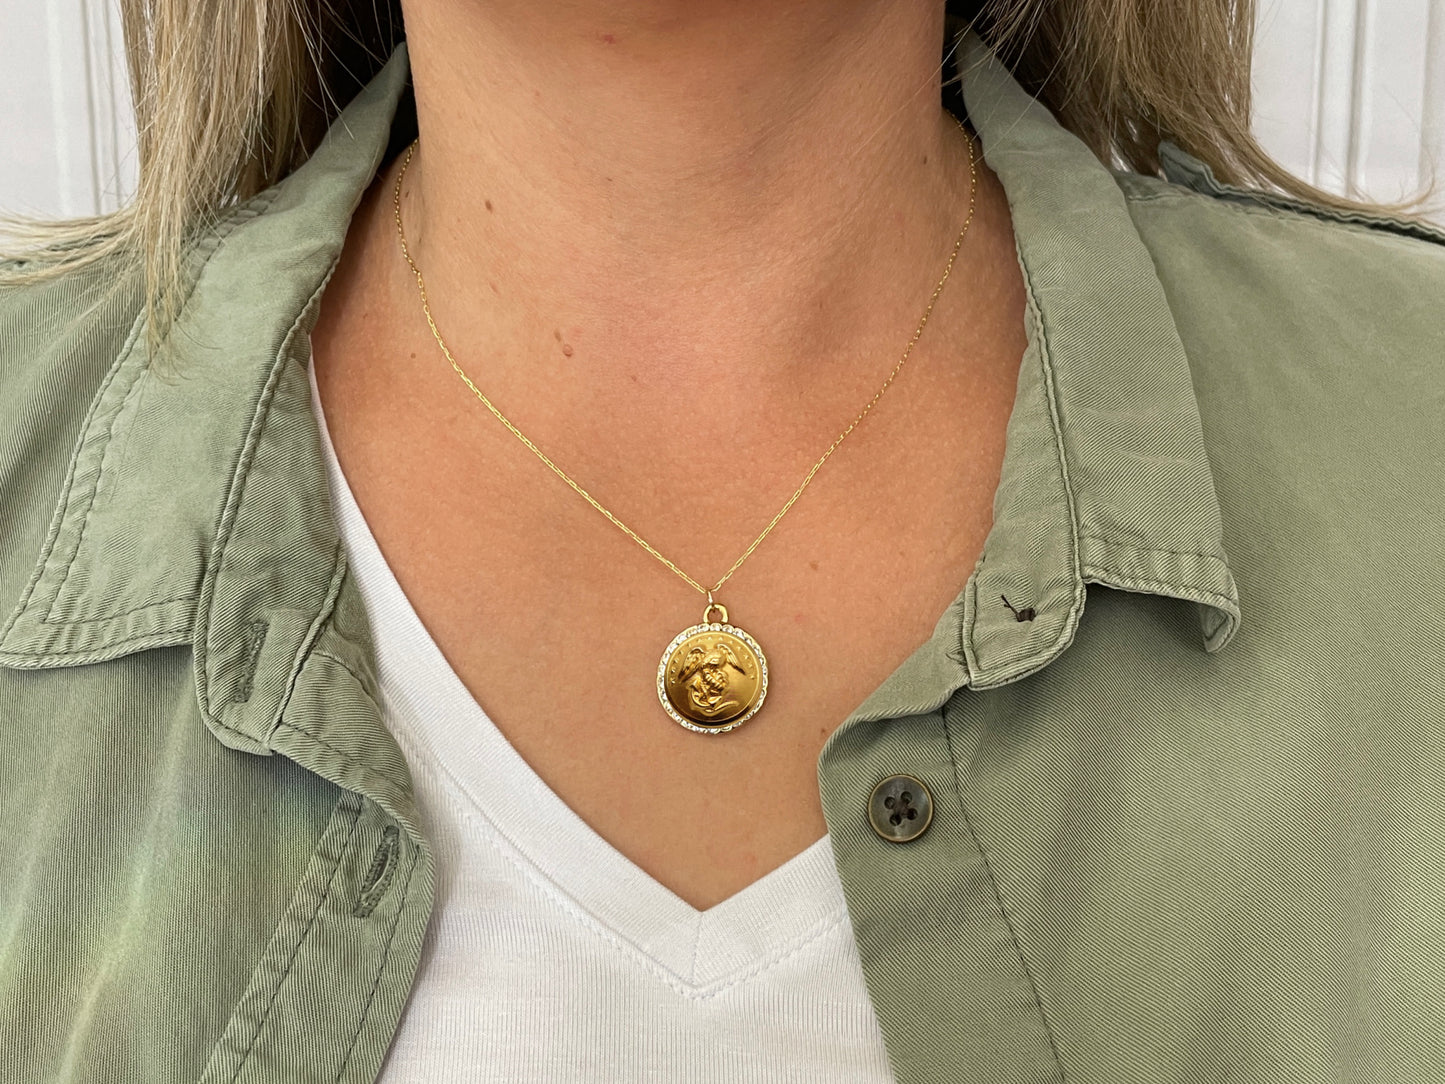 Marine Corps Button Necklace - Small Rhinestone Gold Pendant